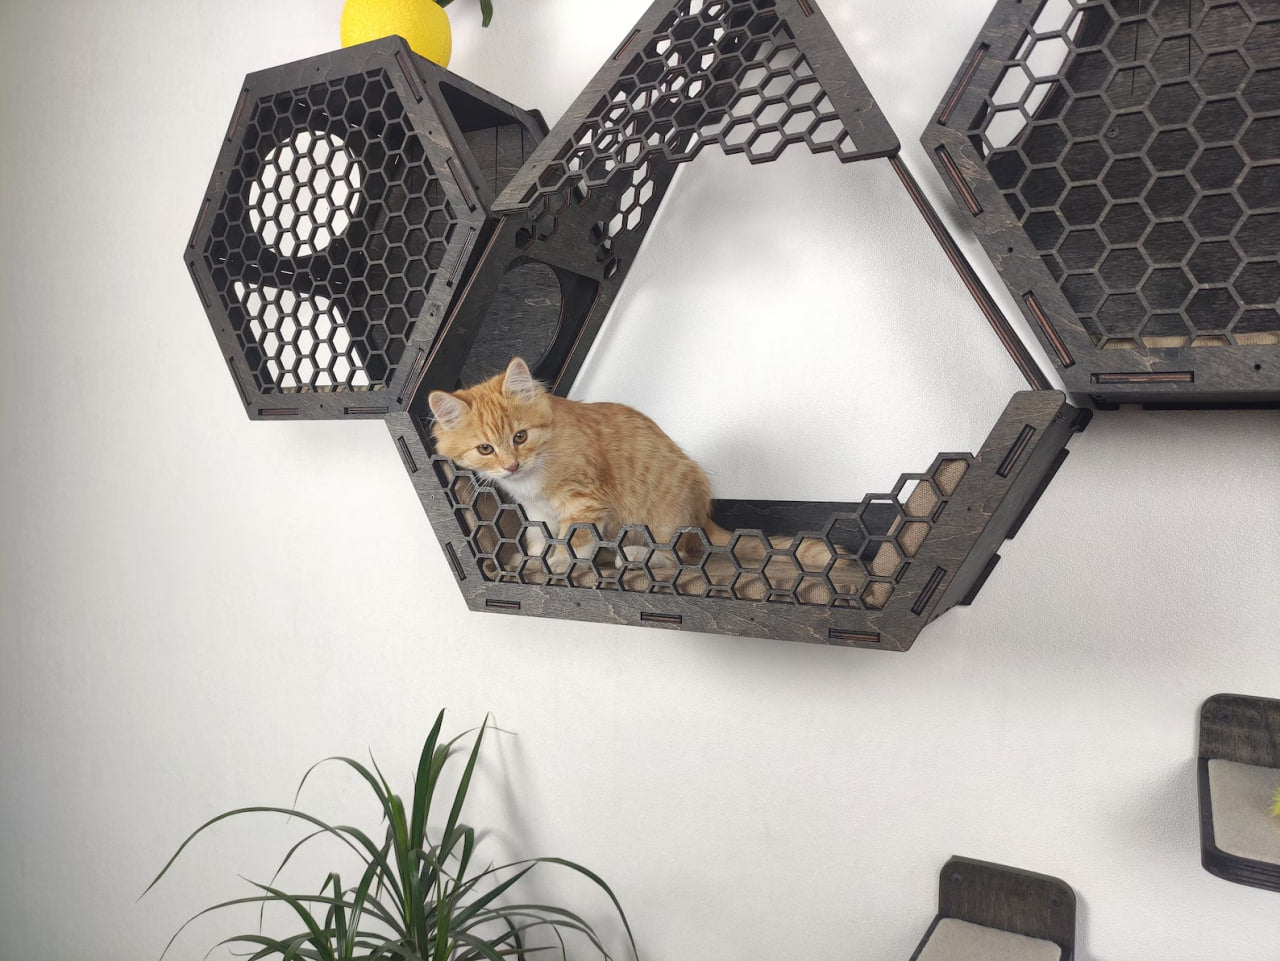 Shelves for a cat wall / Dark & Cat condo set